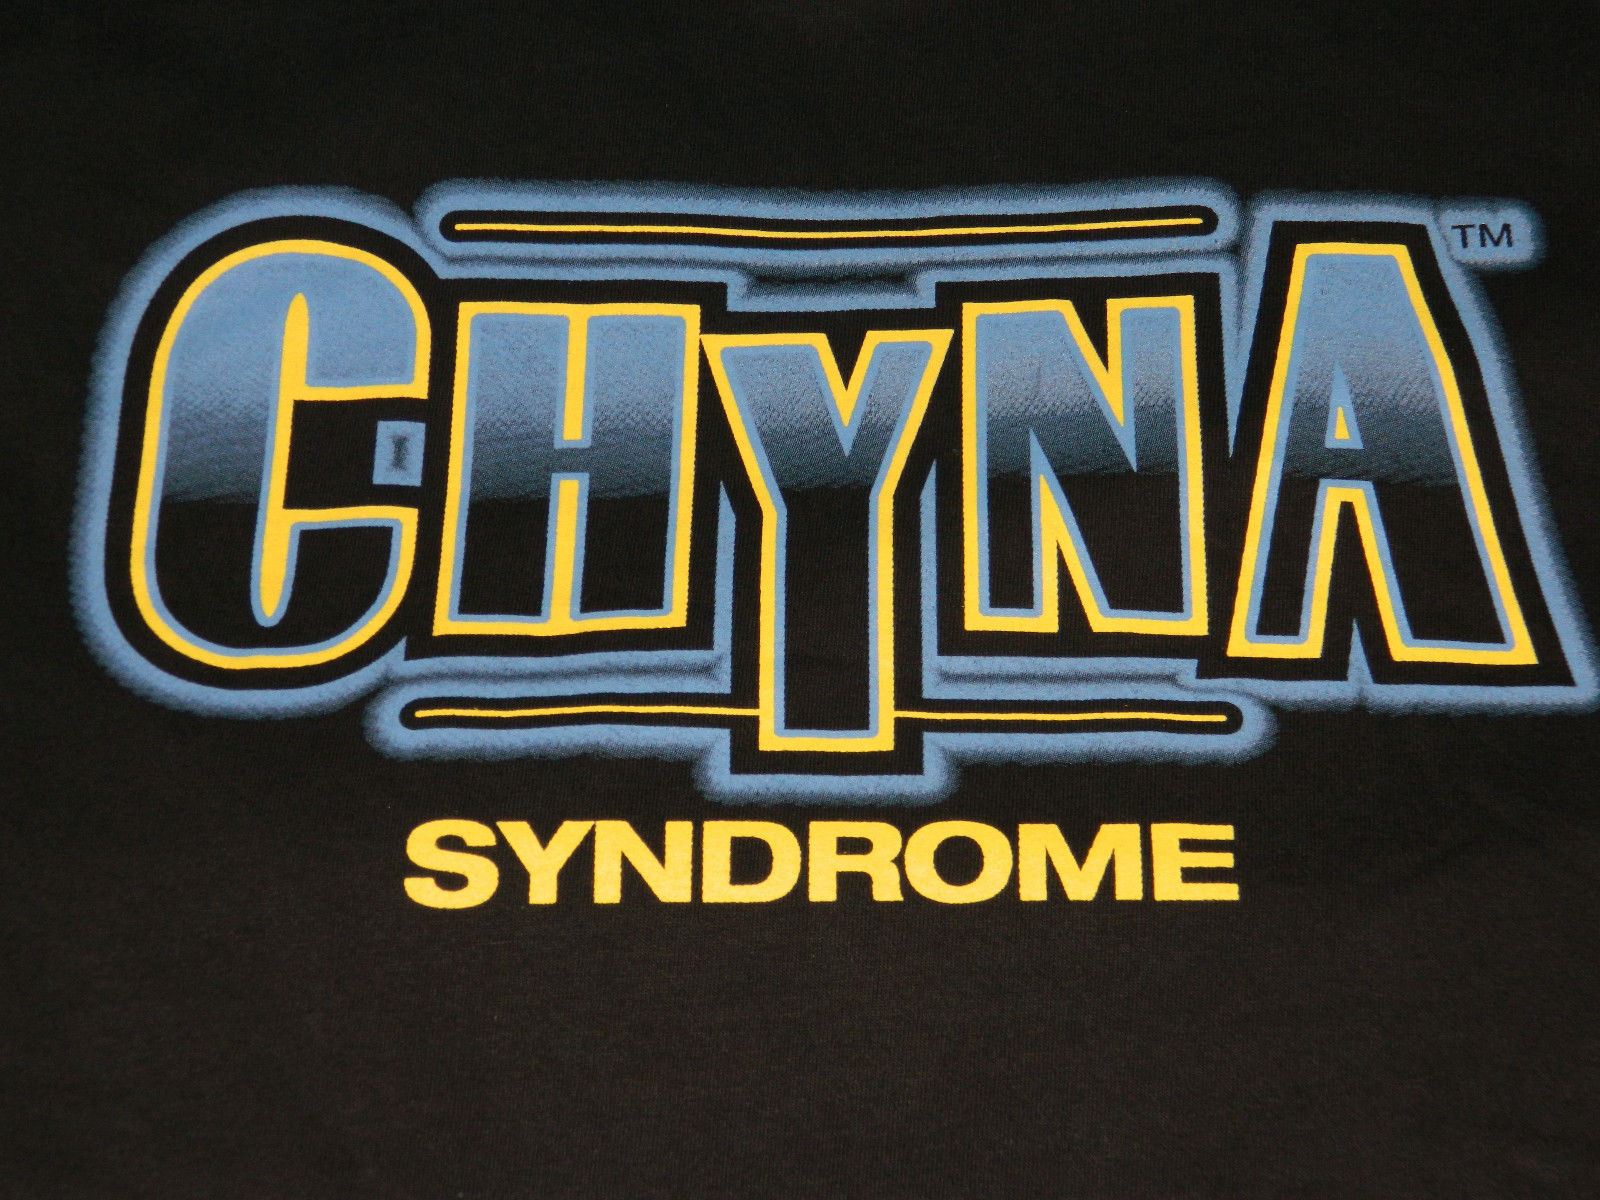 Chyna Syndrome shirt 2